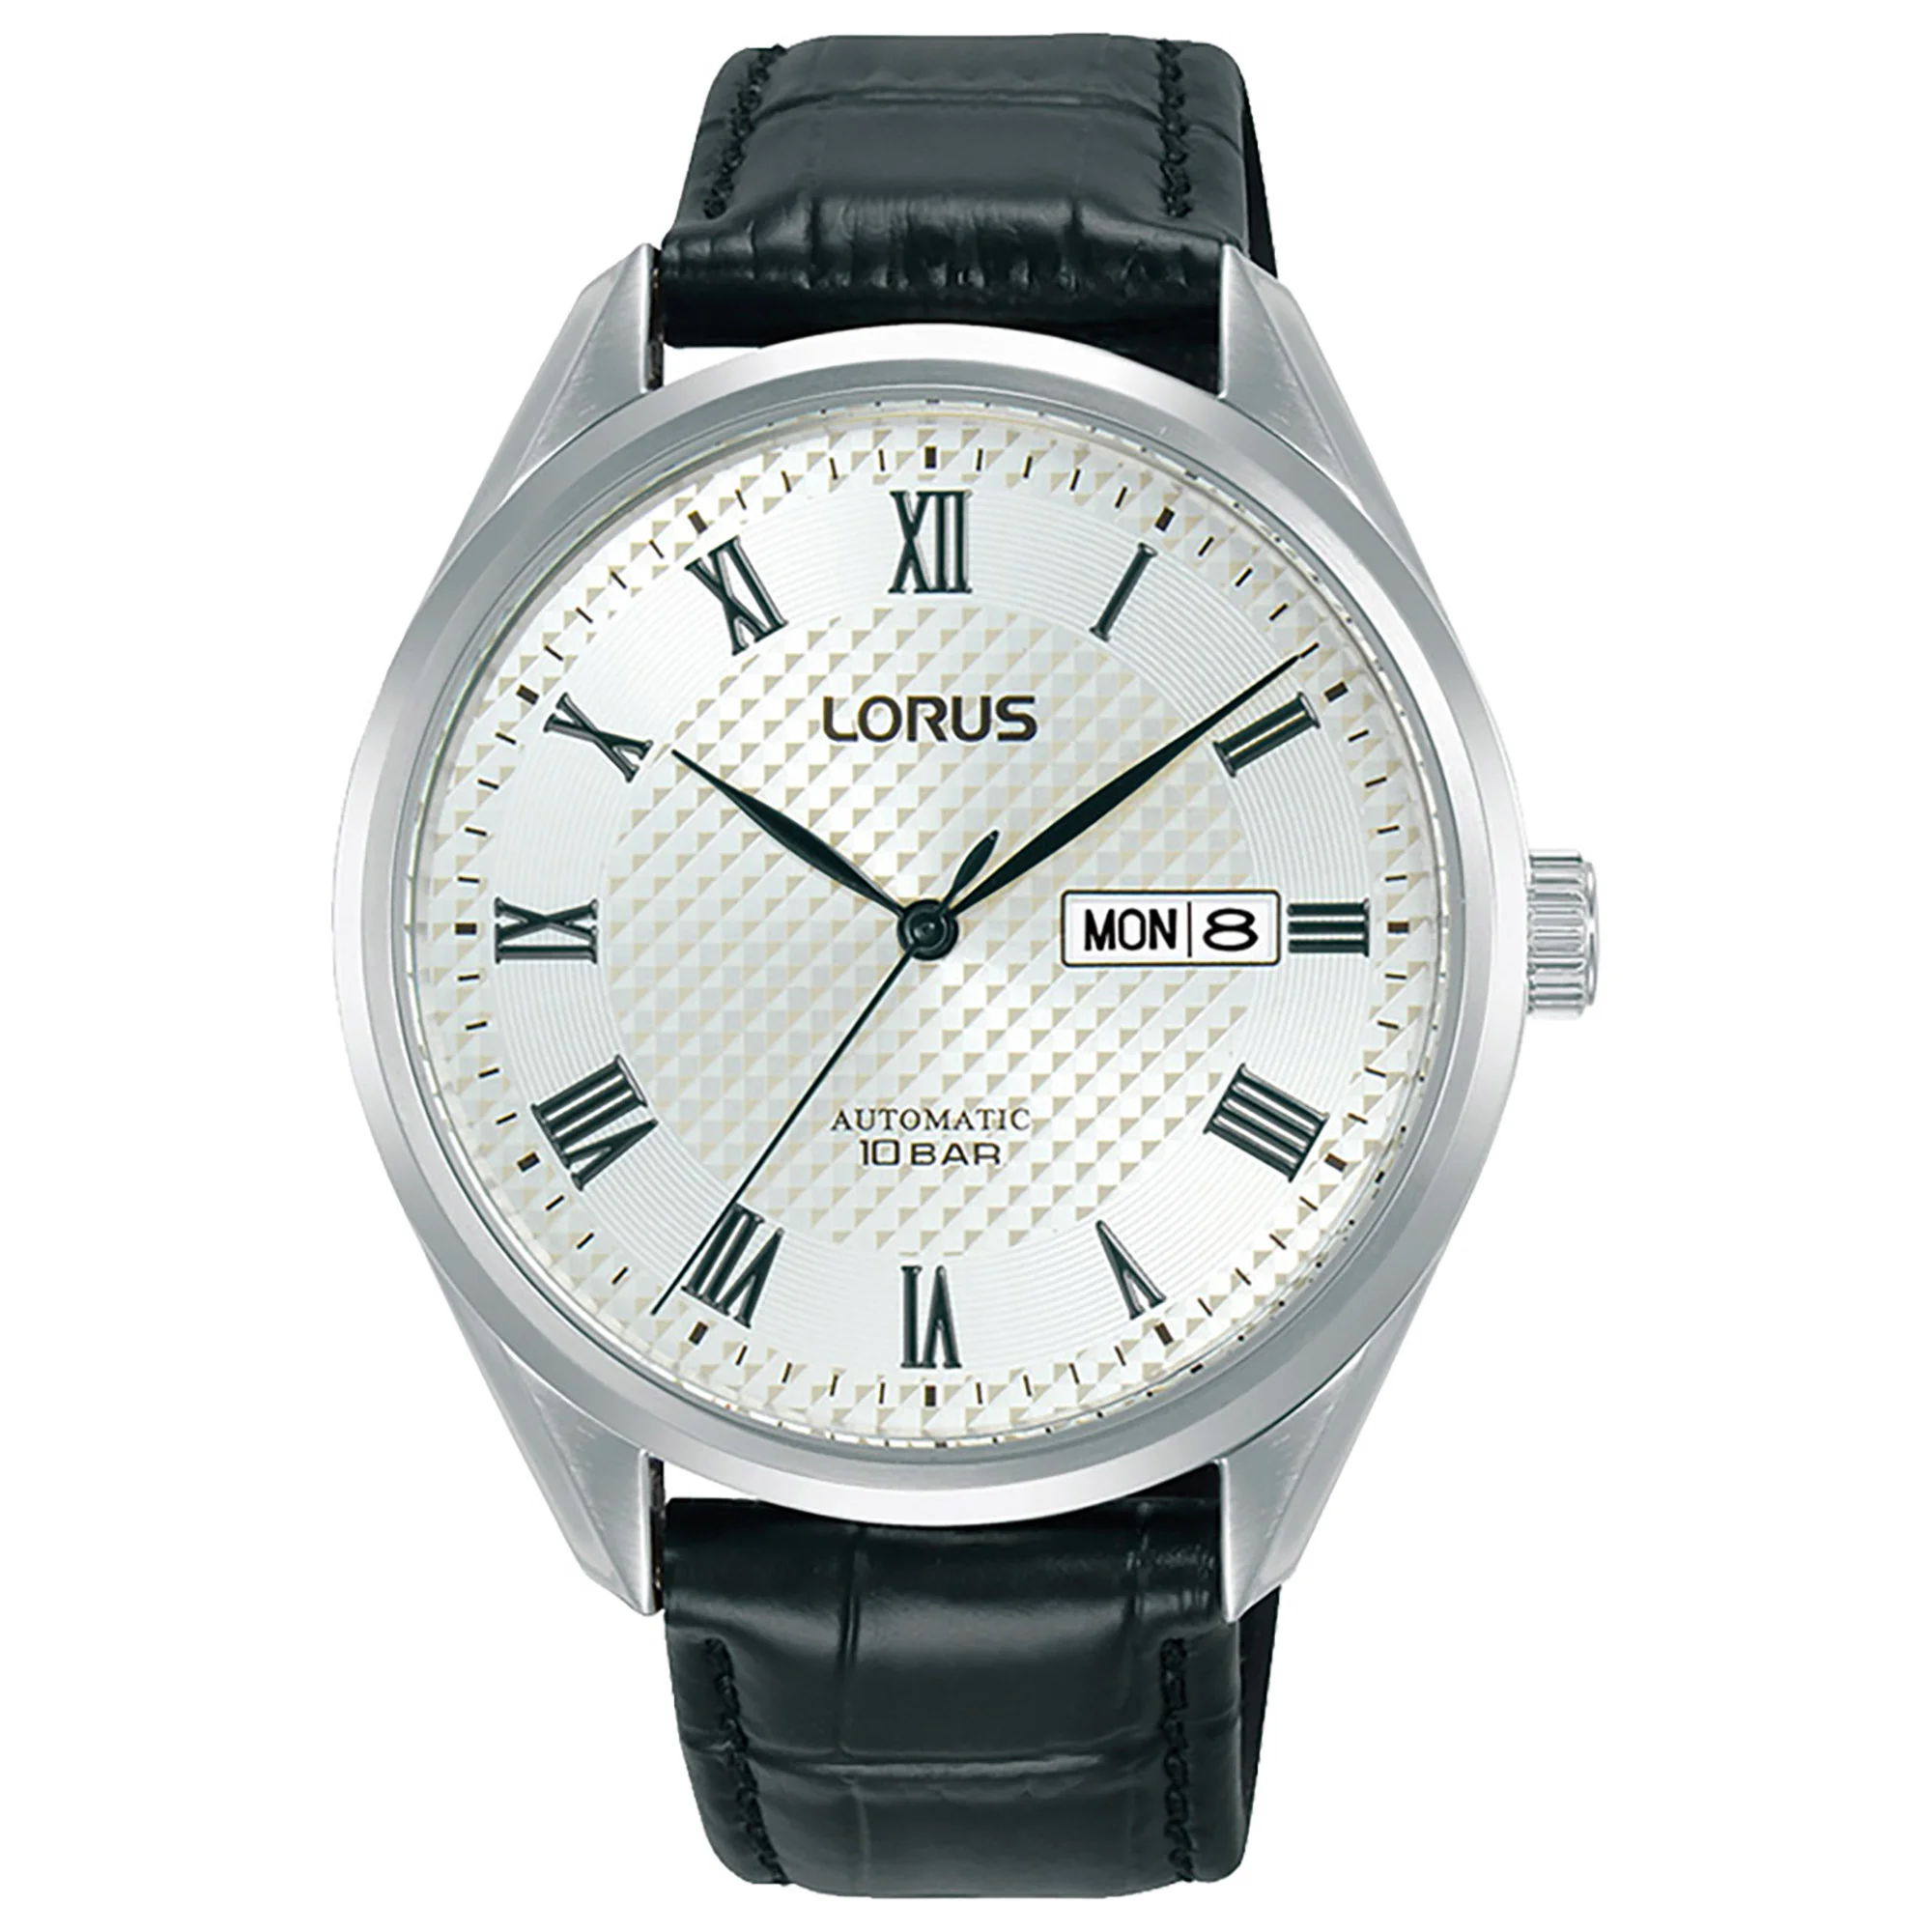 Reloj Lorus rl437bx9